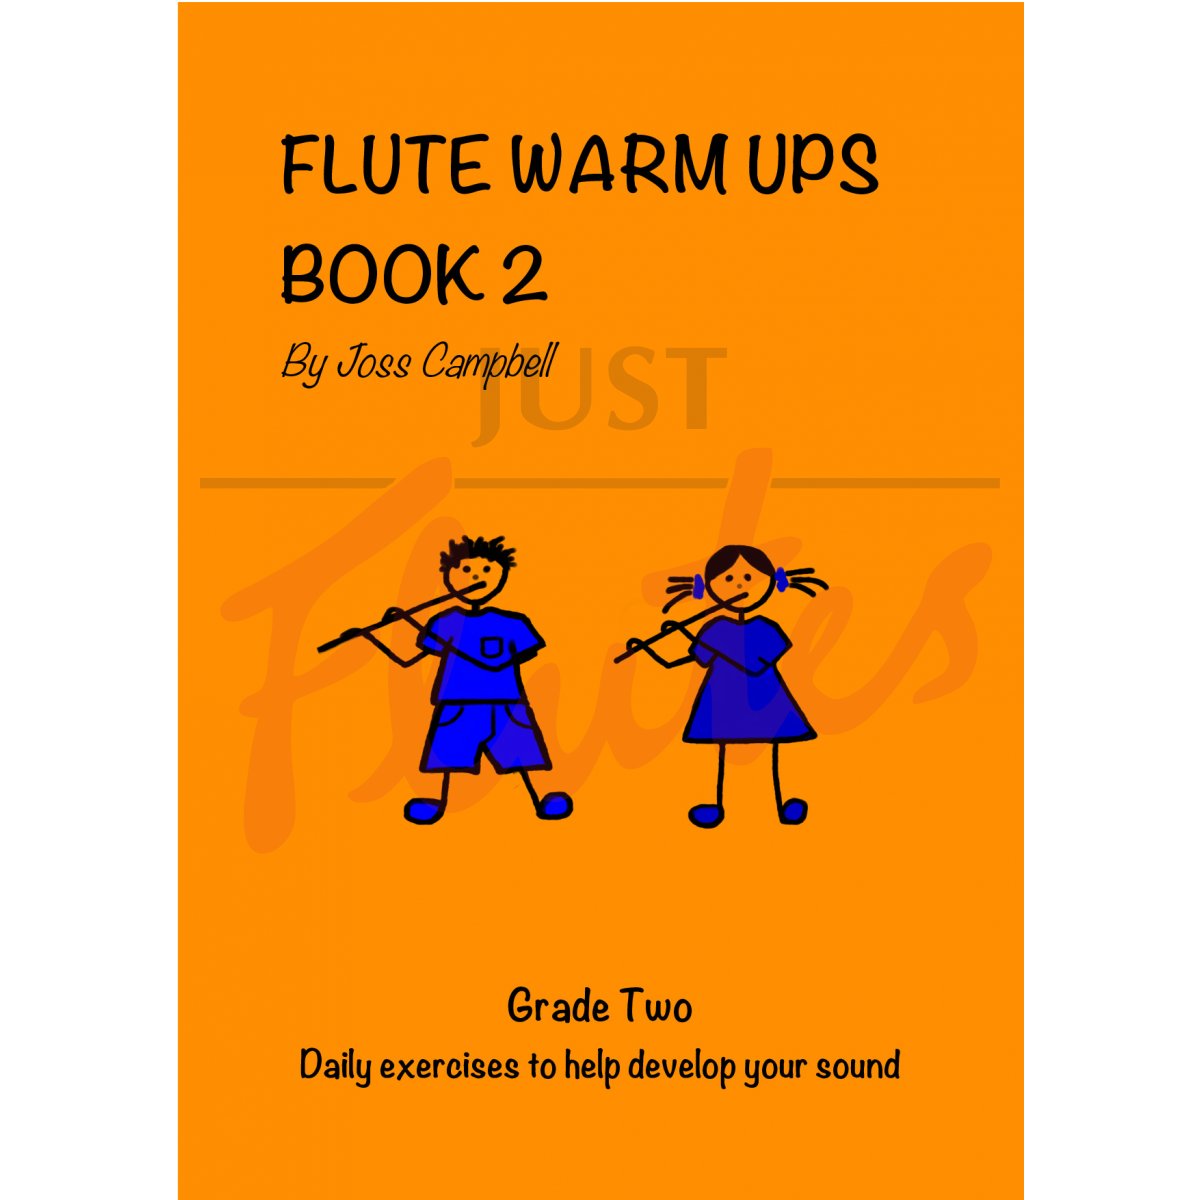 Flute Warm Ups Book 2